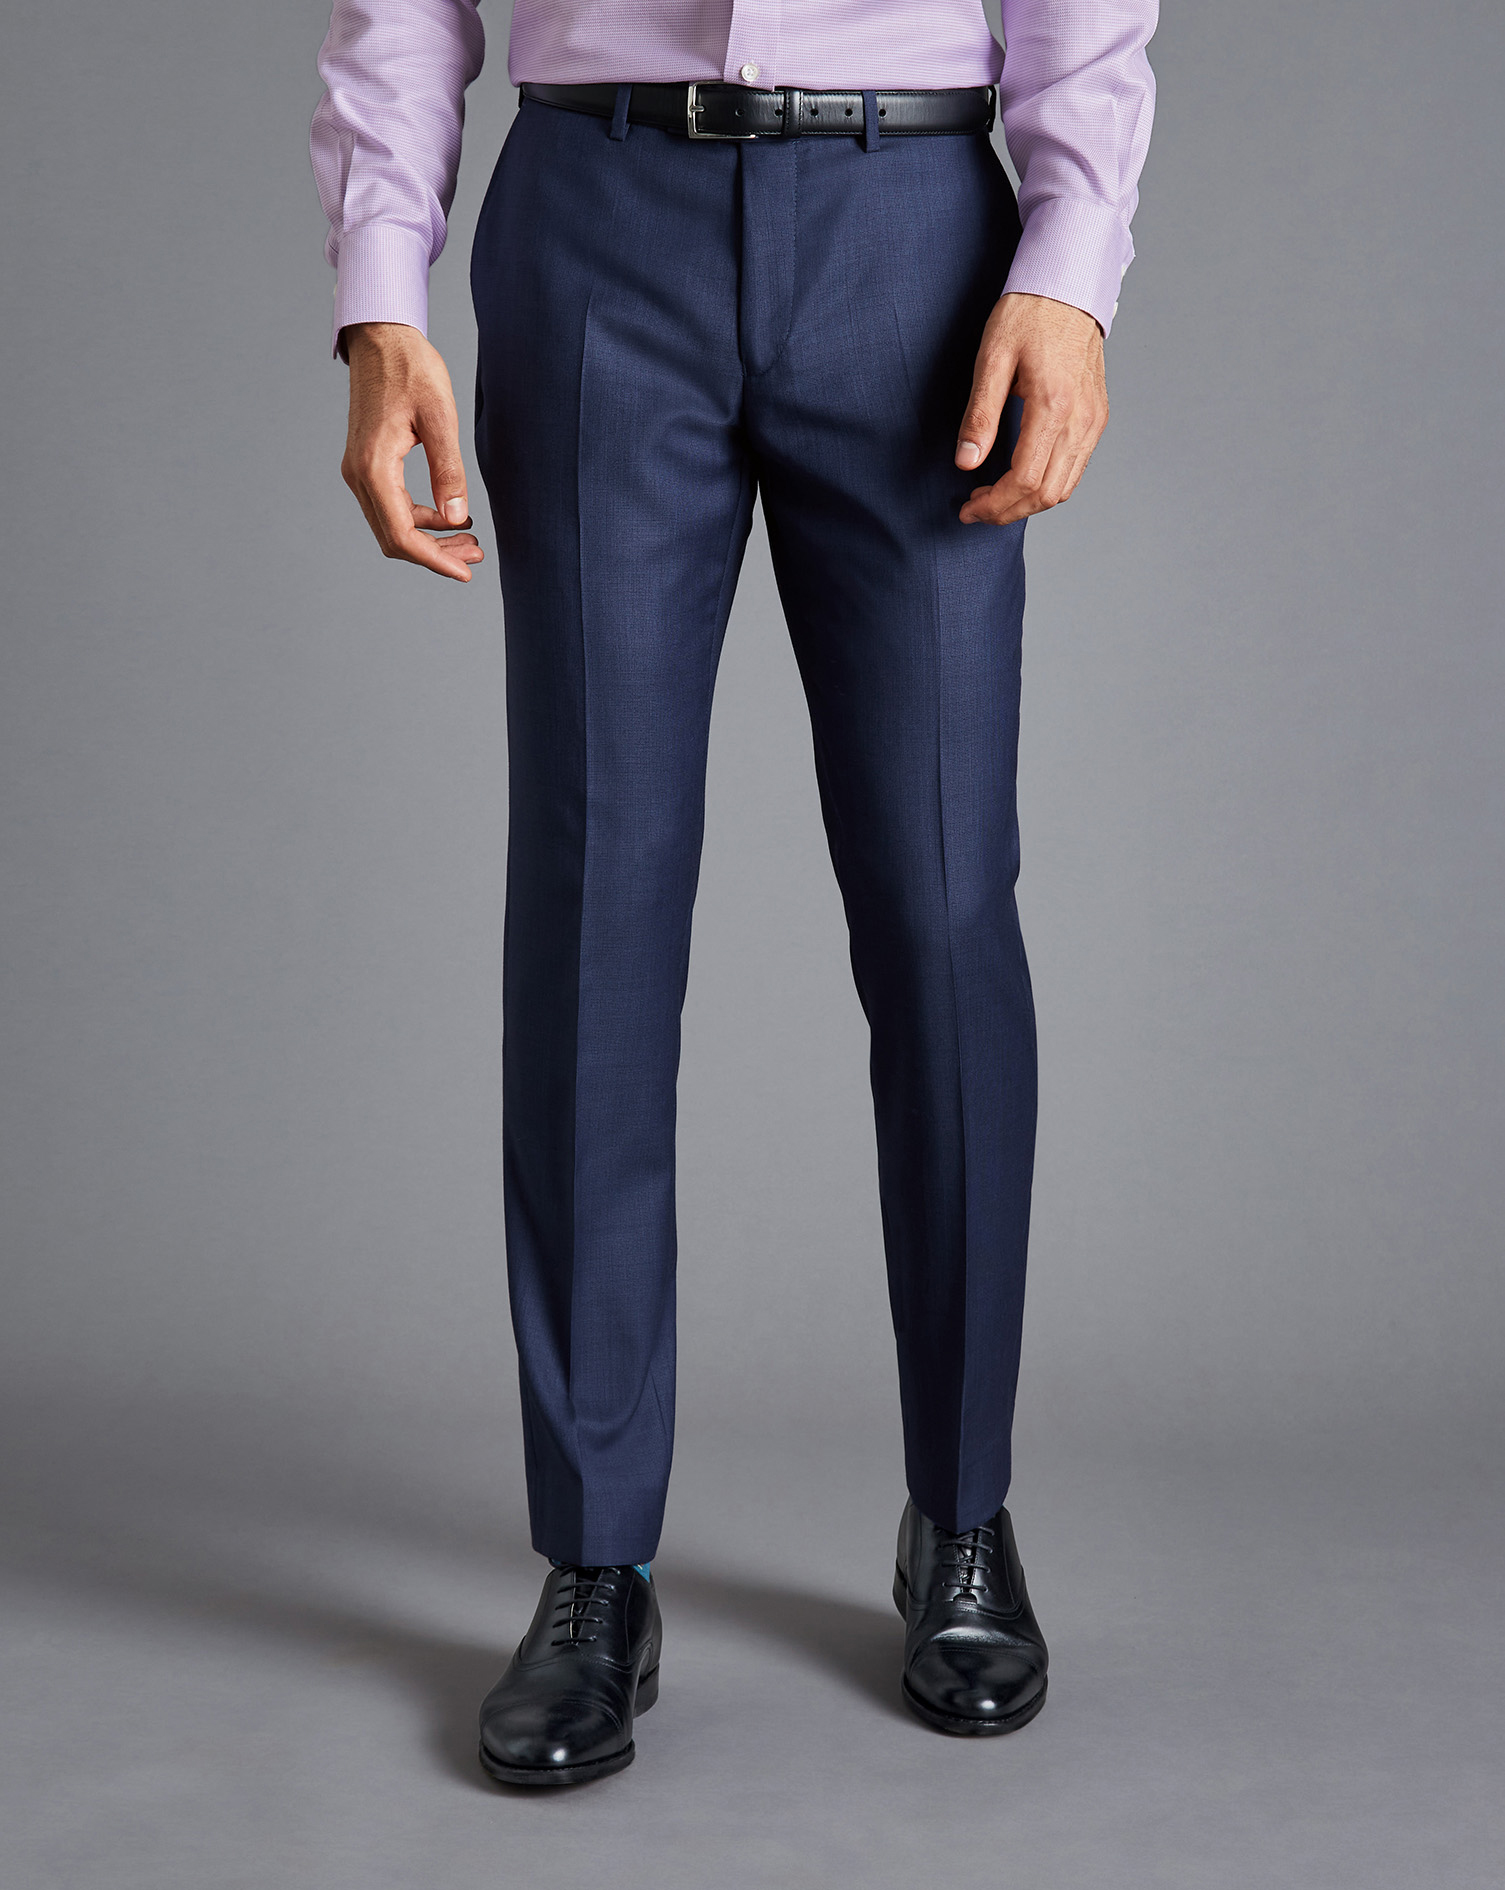 Men's Charles Tyrwhitt Italian Luxury Textured Suit Trousers - Indigo Blue Size 34/38 Wool
